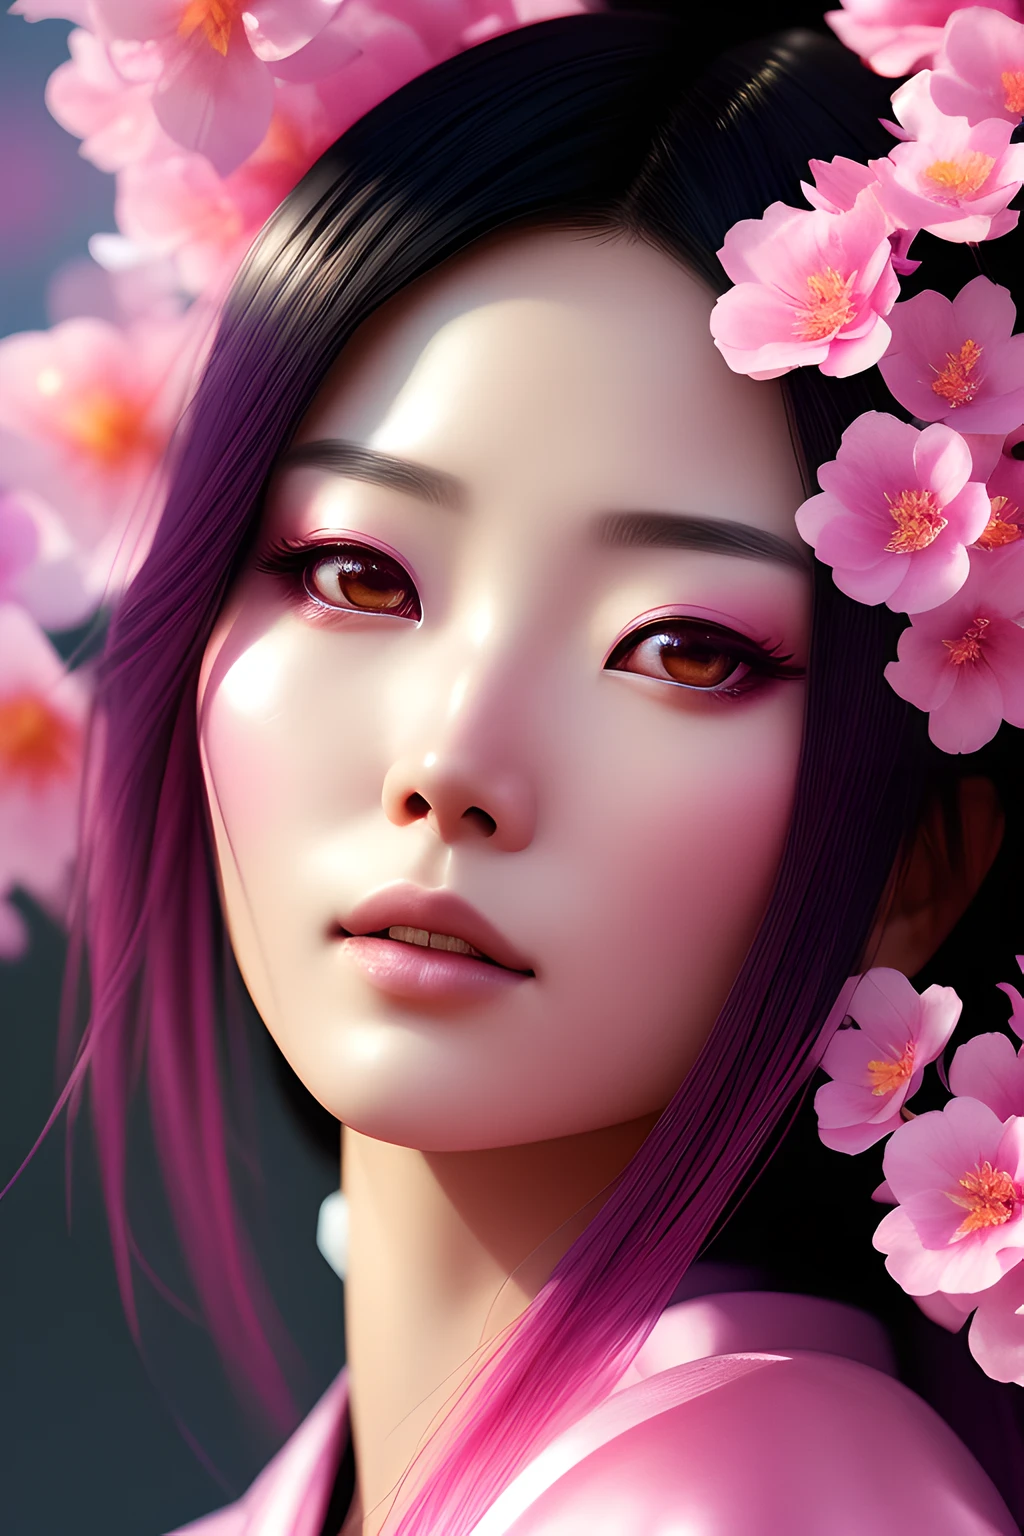 ChromaV5:1.6, 恩温克朋克, 模拟风格,  一位身穿粉色和服的美丽日本女人的特写, 被美丽的粉红色花朵包围, 工作室拍摄, 漂亮的脸蛋, 漂亮的眼睛, 格雷格·鲁特科斯基的艺术作品, 概念艺术, artstation 上的热门